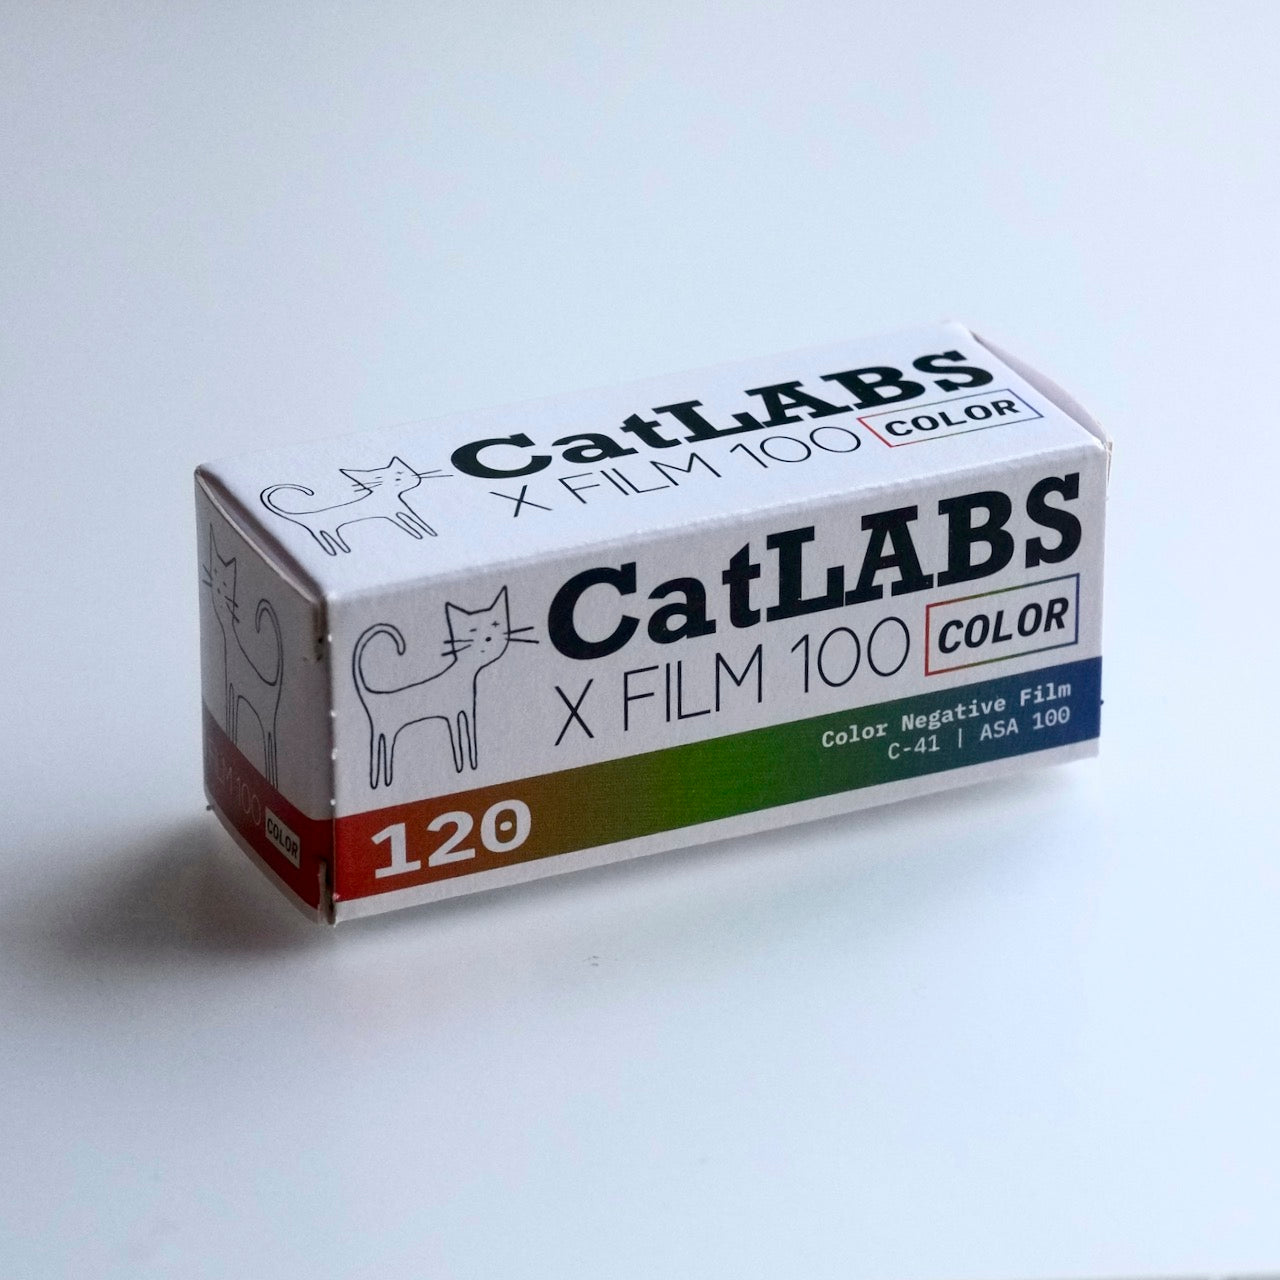 Catlabs X Film 100 Color